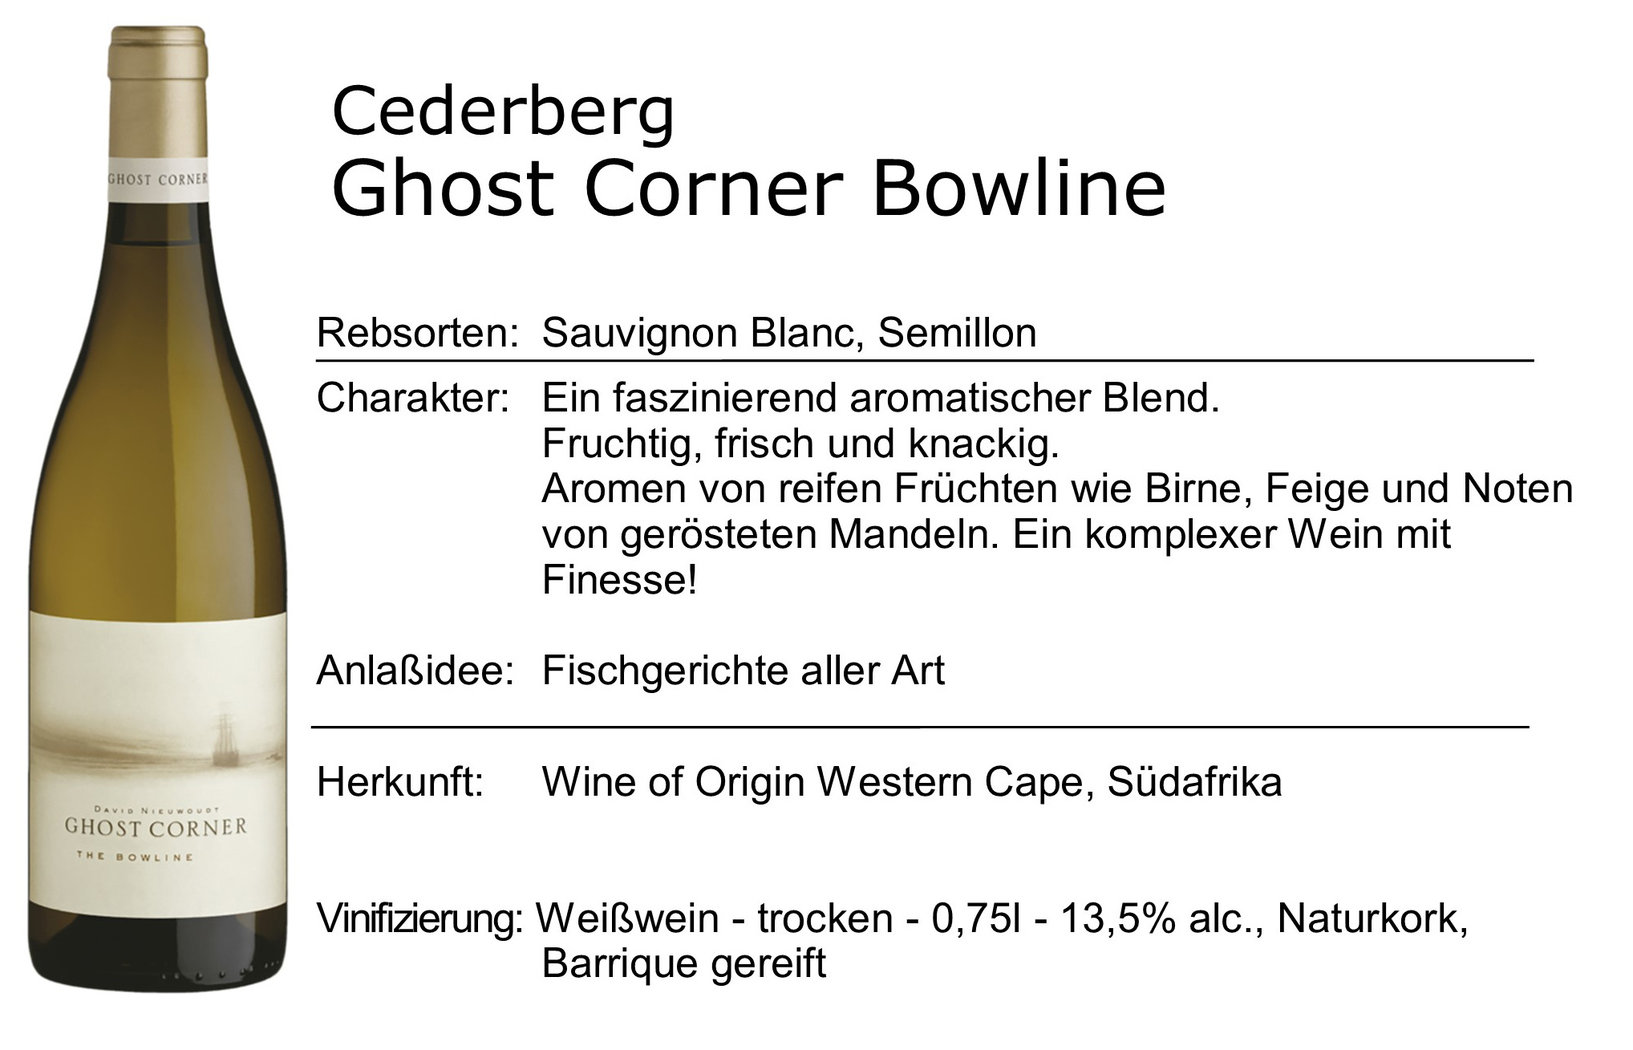 Cederberg Ghost Corner Bowline 2018